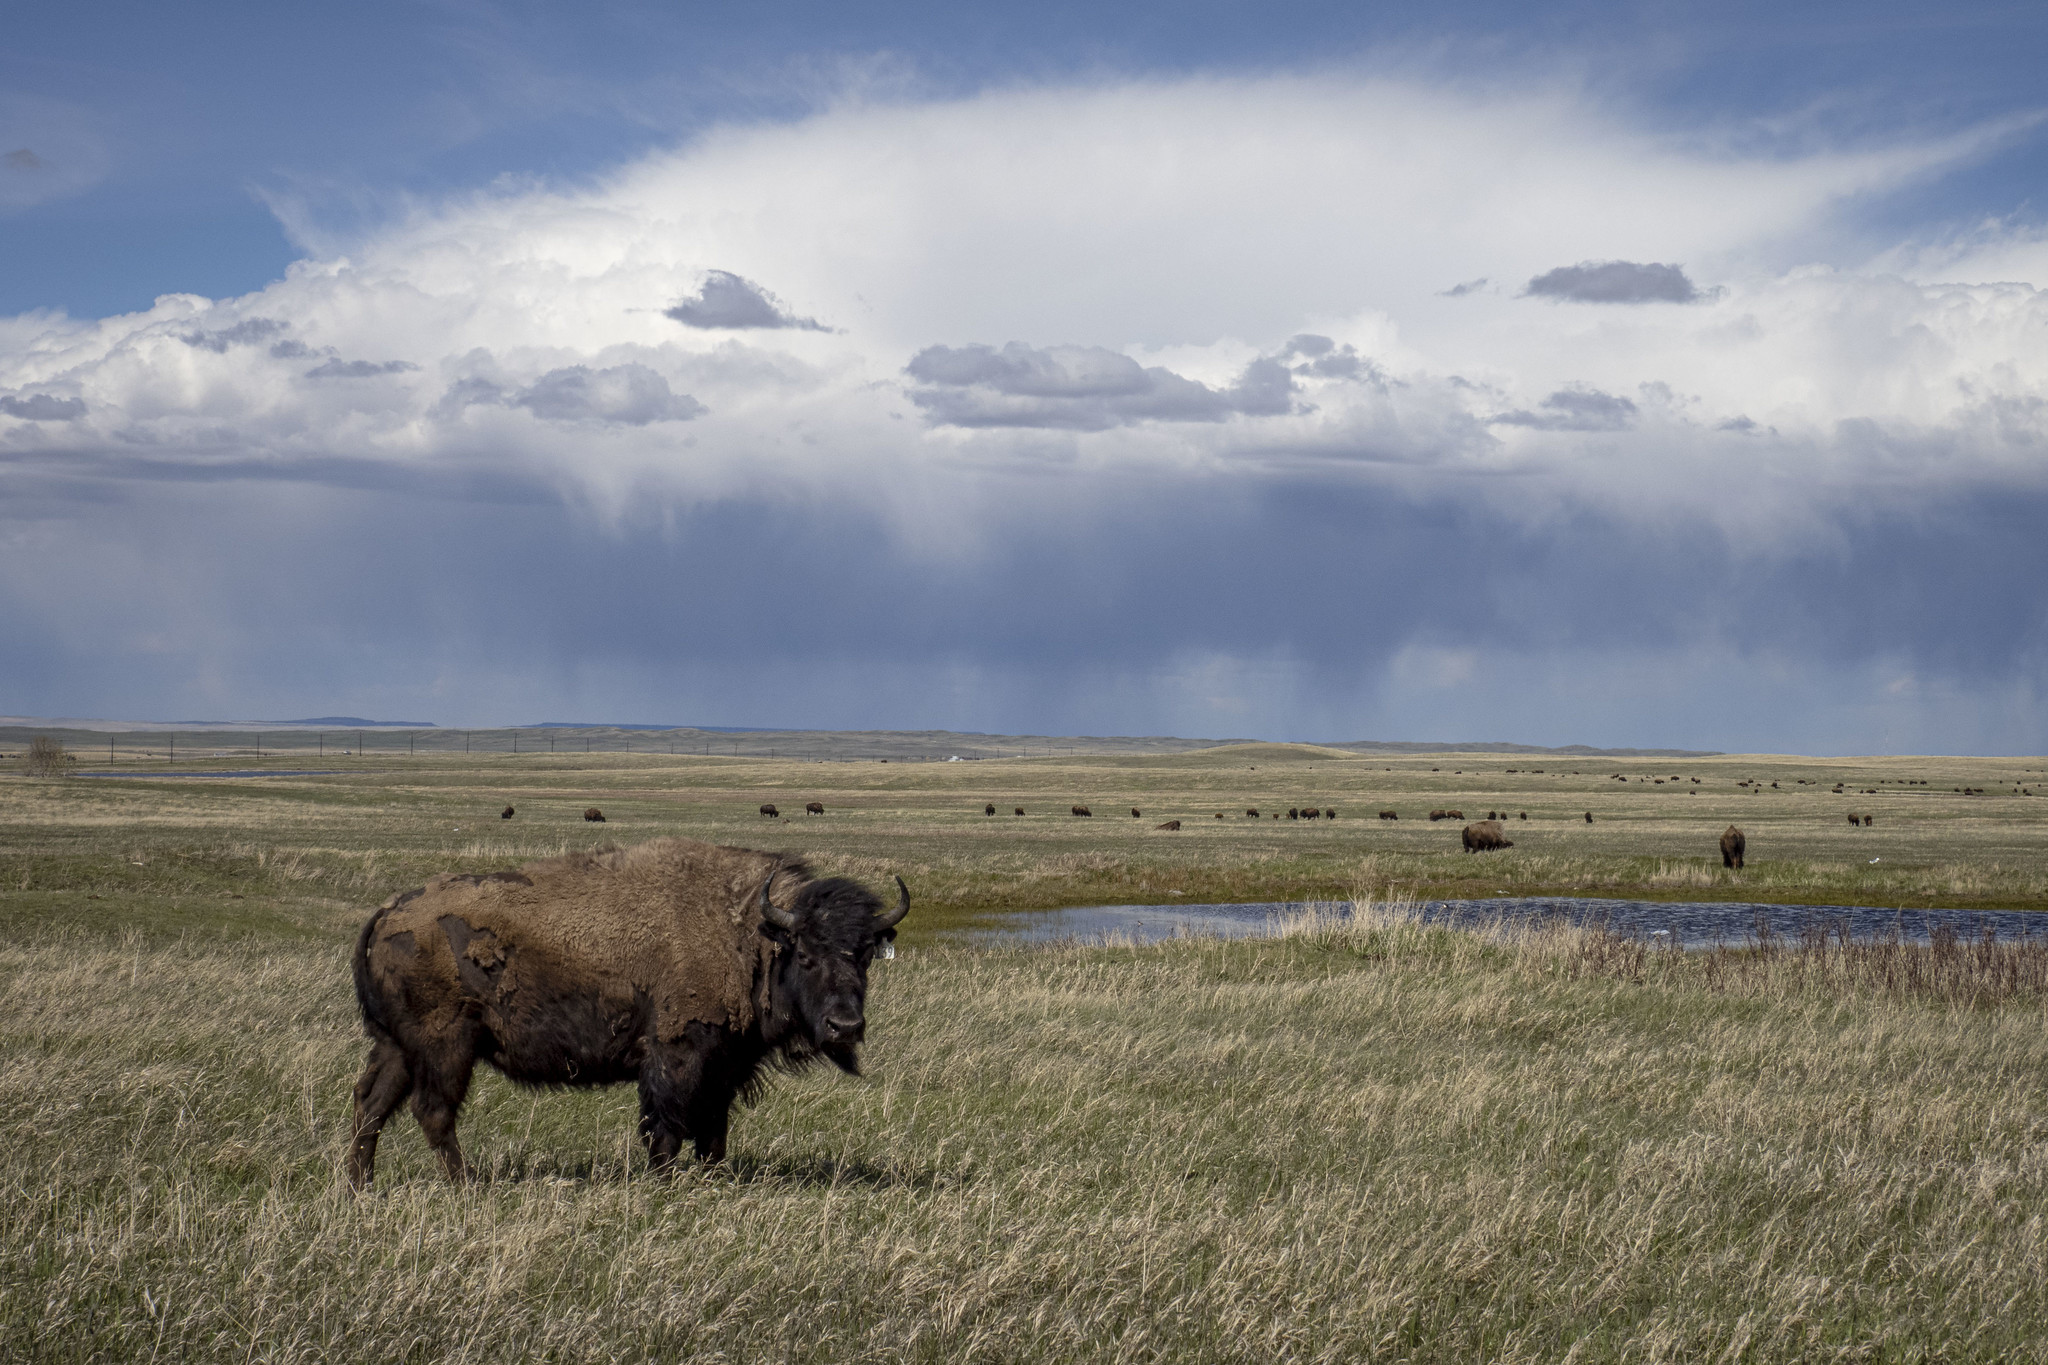 A Buffalo standing on open rolling hills